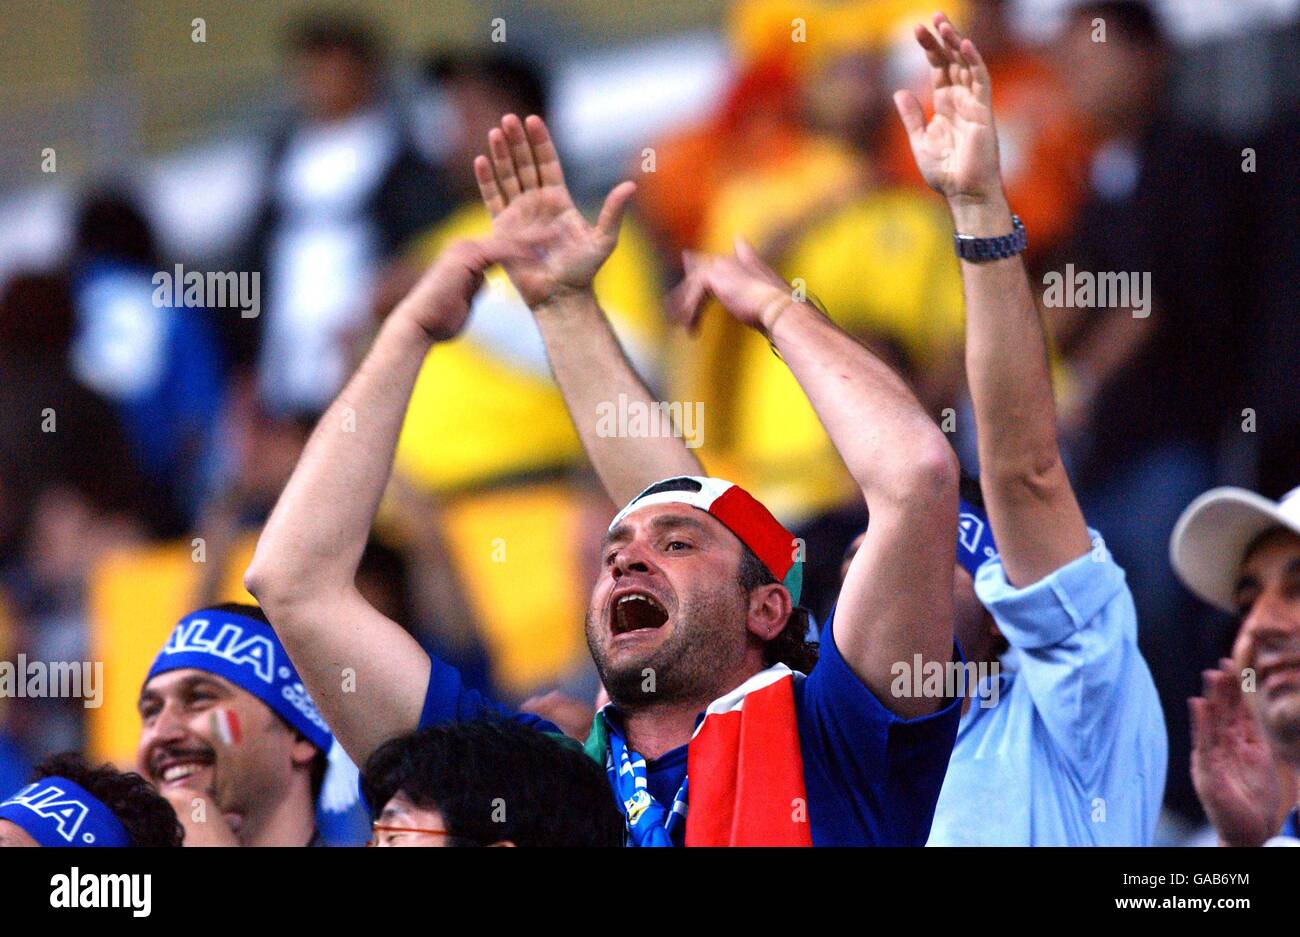 Soccer - FIFA World Cup 2002 - Group G - Italy v Ecuador. Italy fans cheer on their team Stock Photo